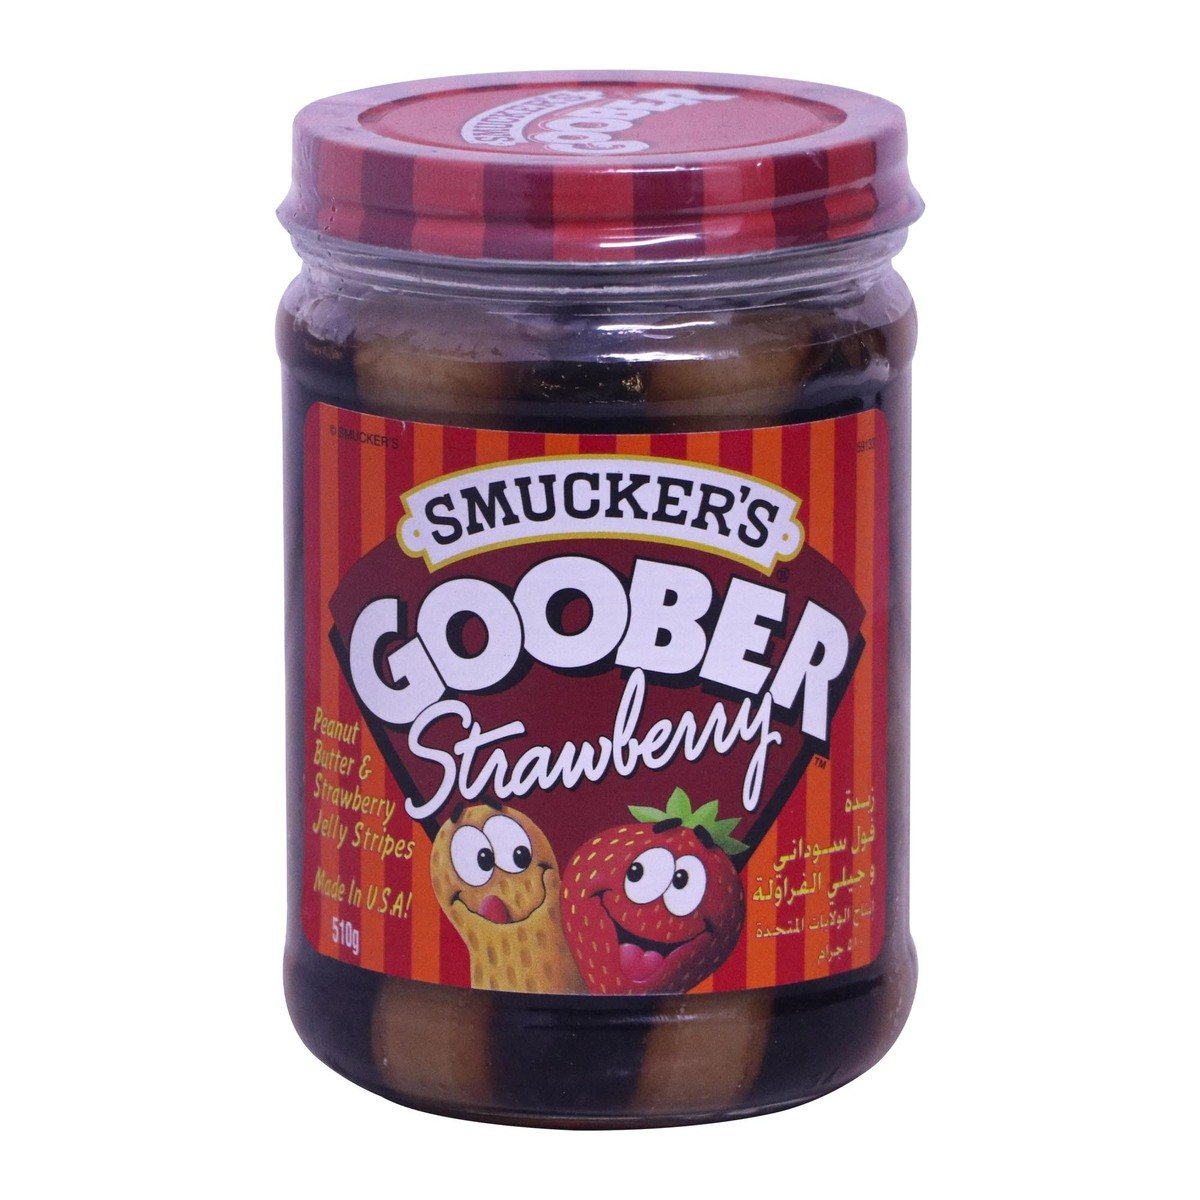 Smucker's Goober Strawberry 510 g